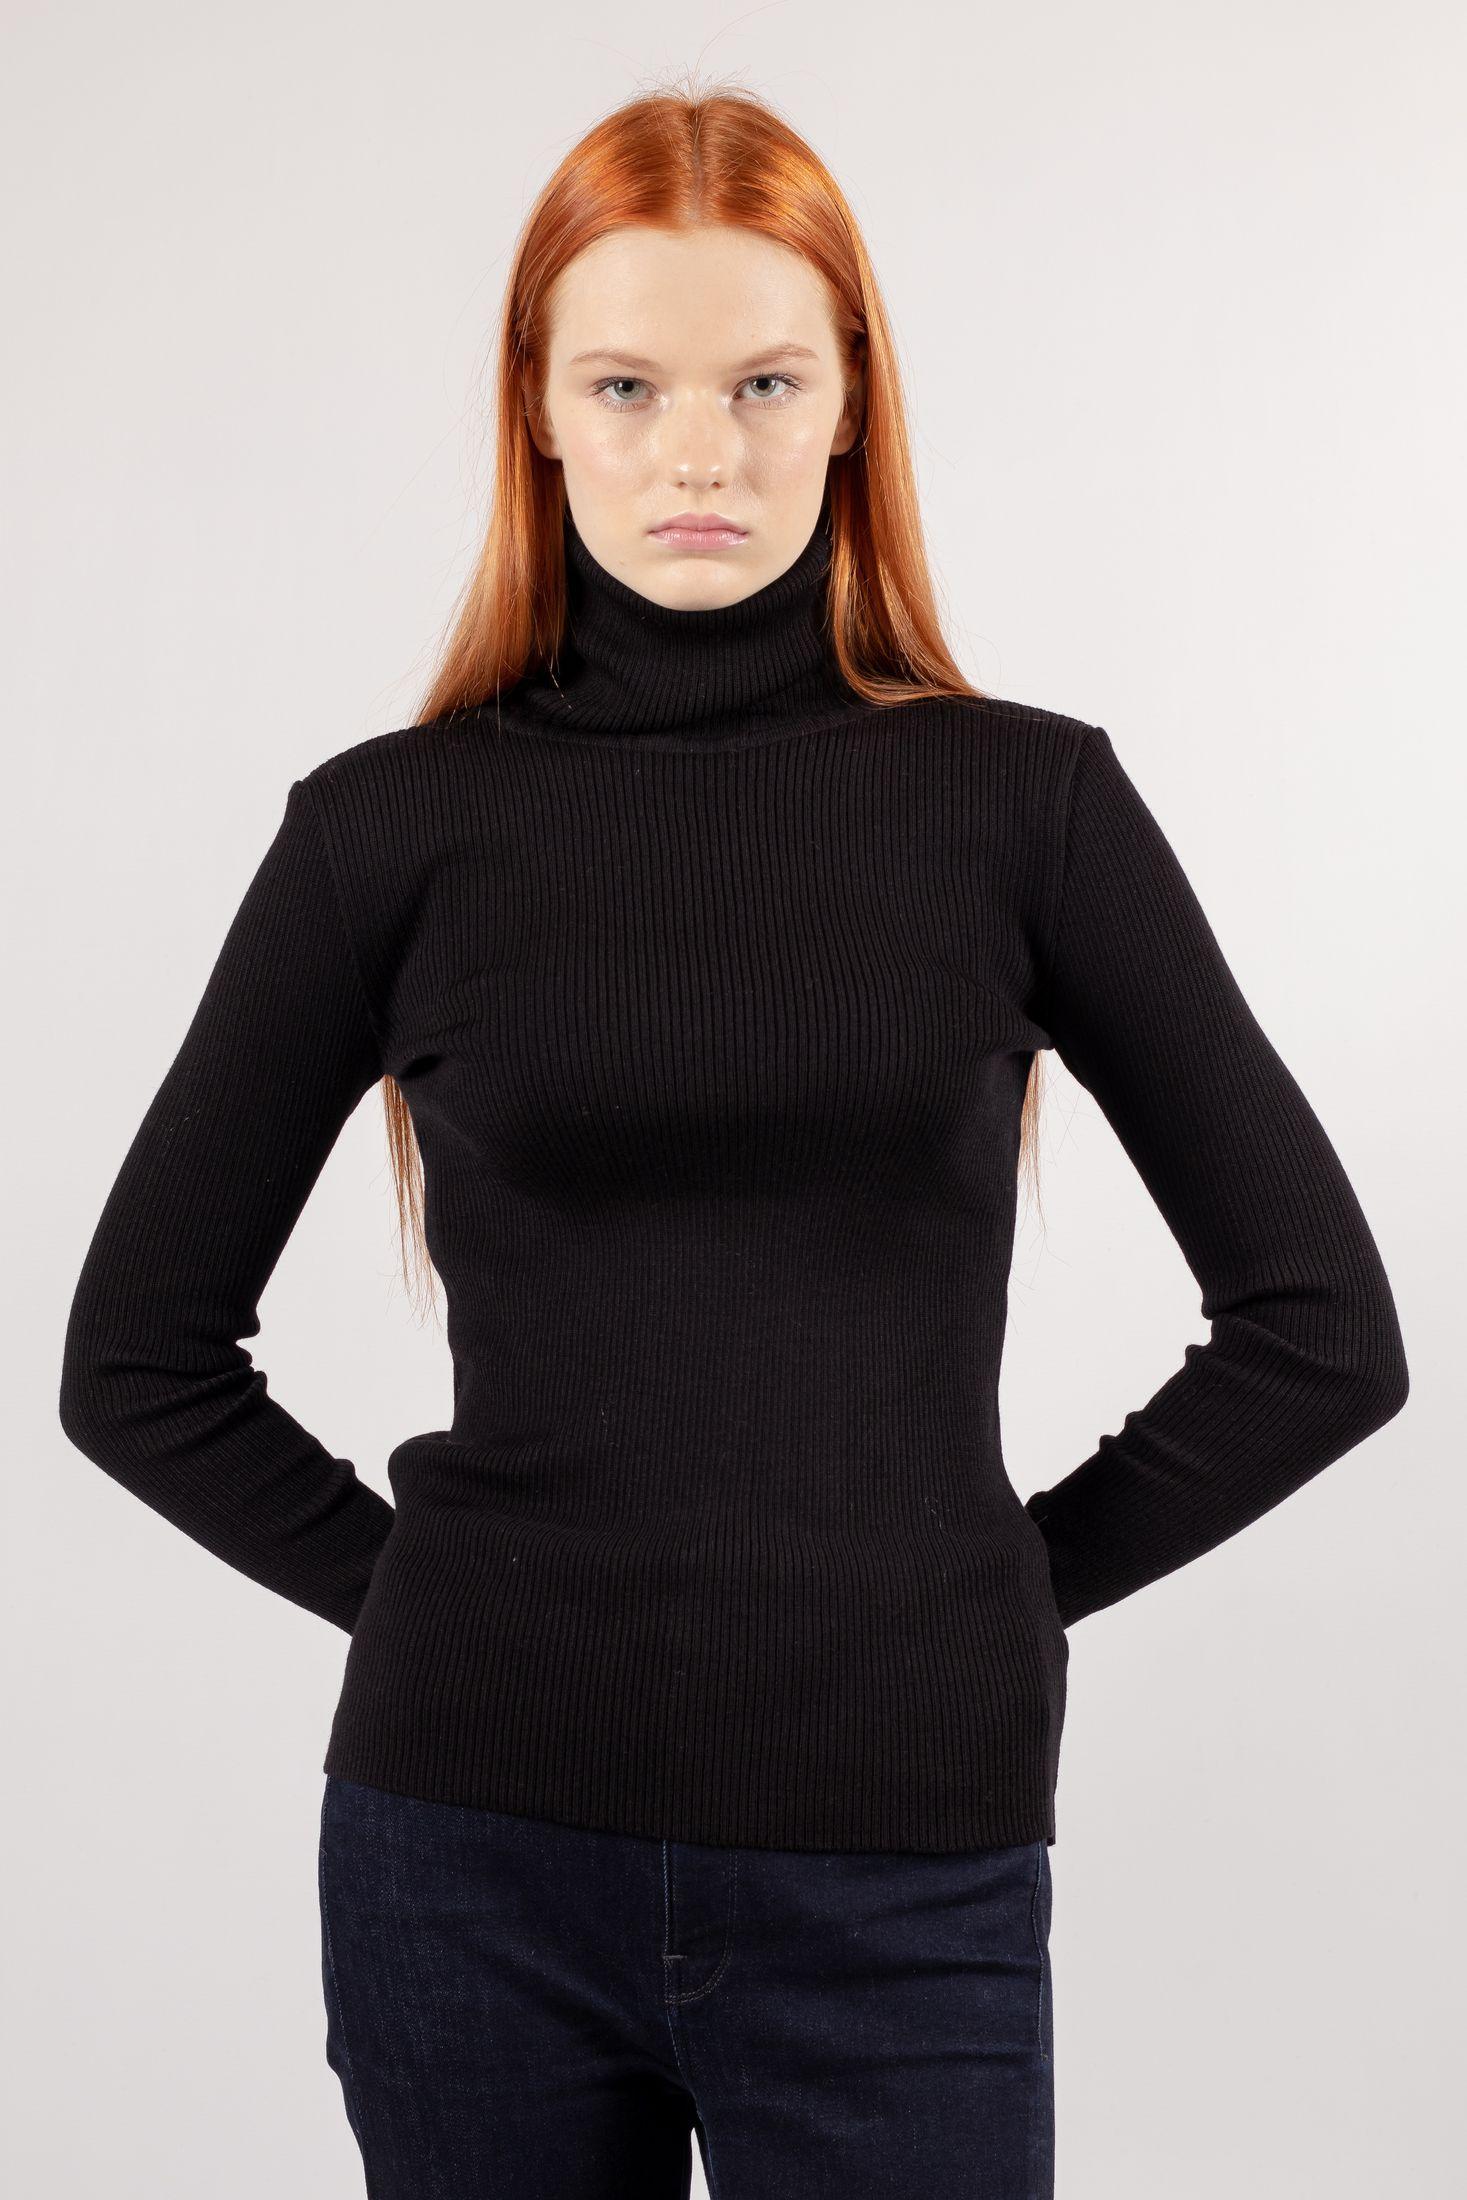 Chic HELGA Black Merino Sweater with Classic Turtleneck Design